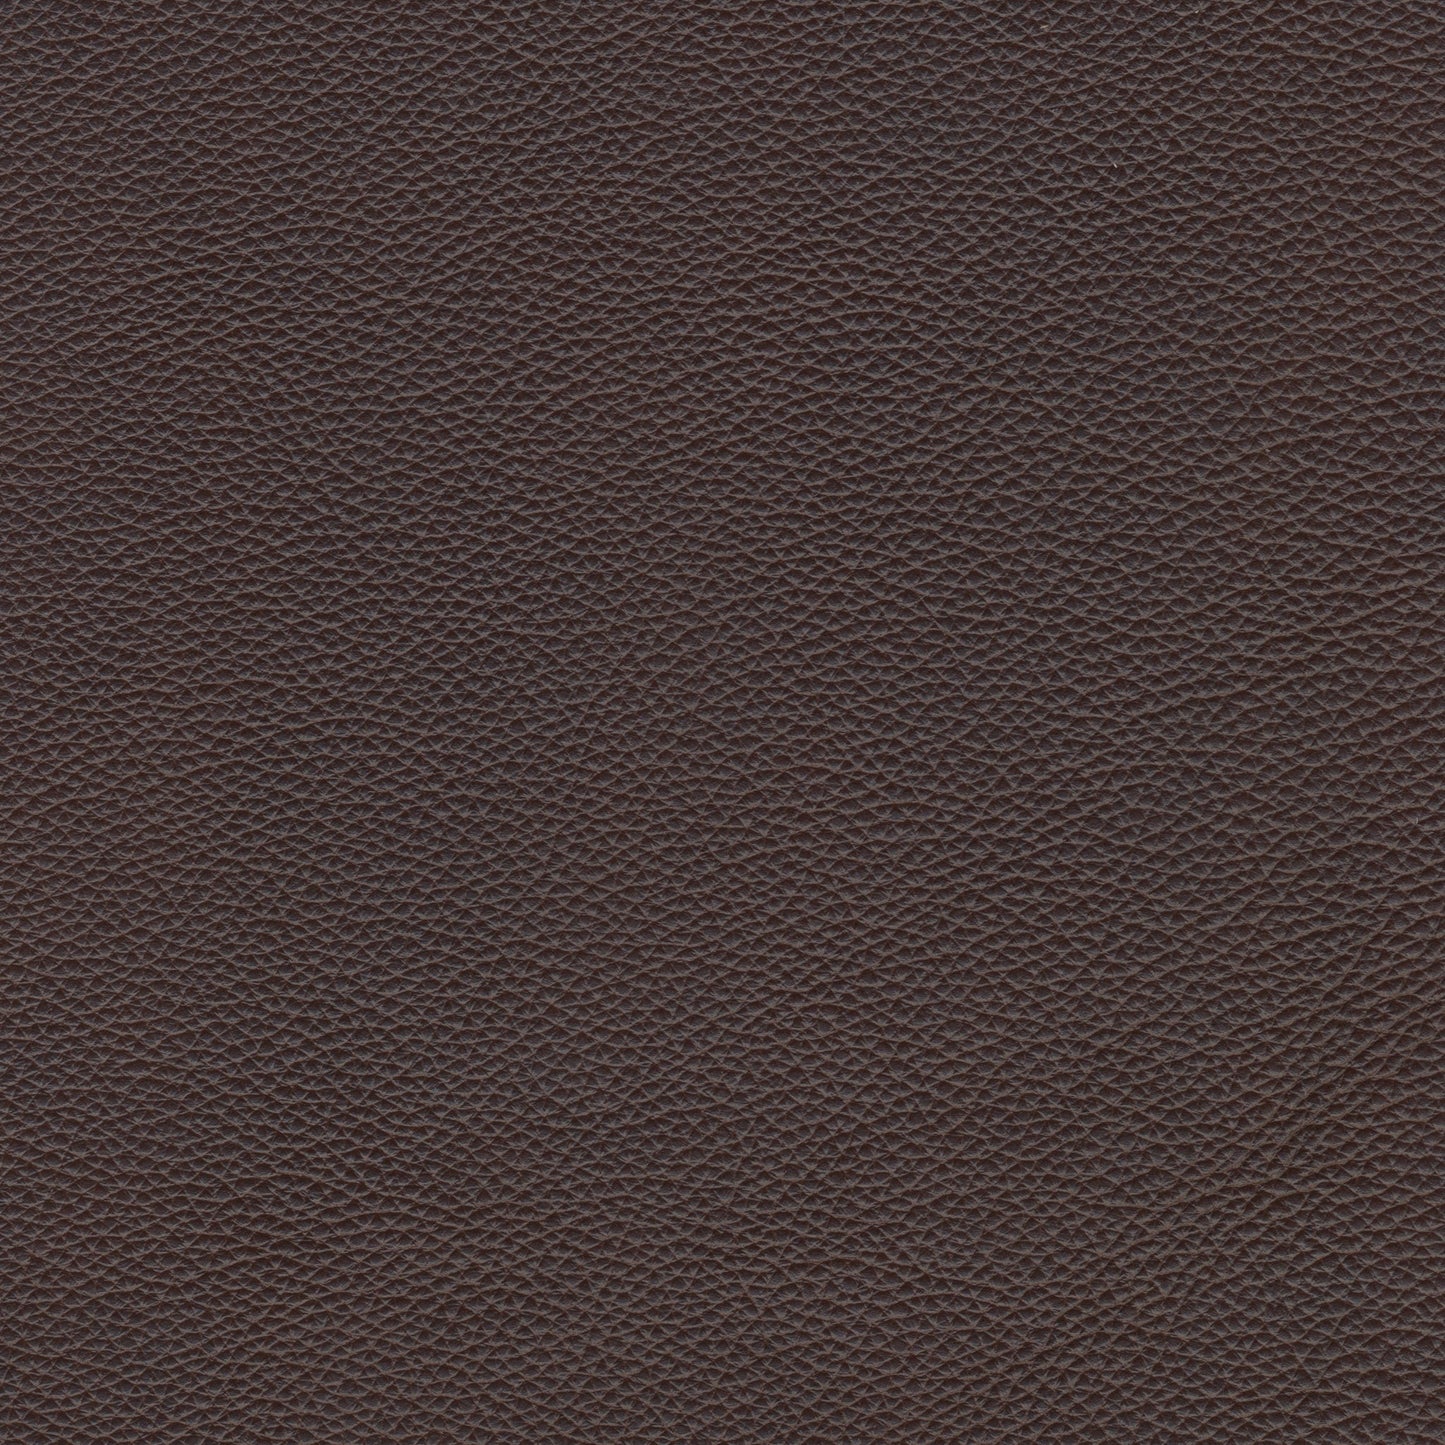 Selvano Chestnut Leather